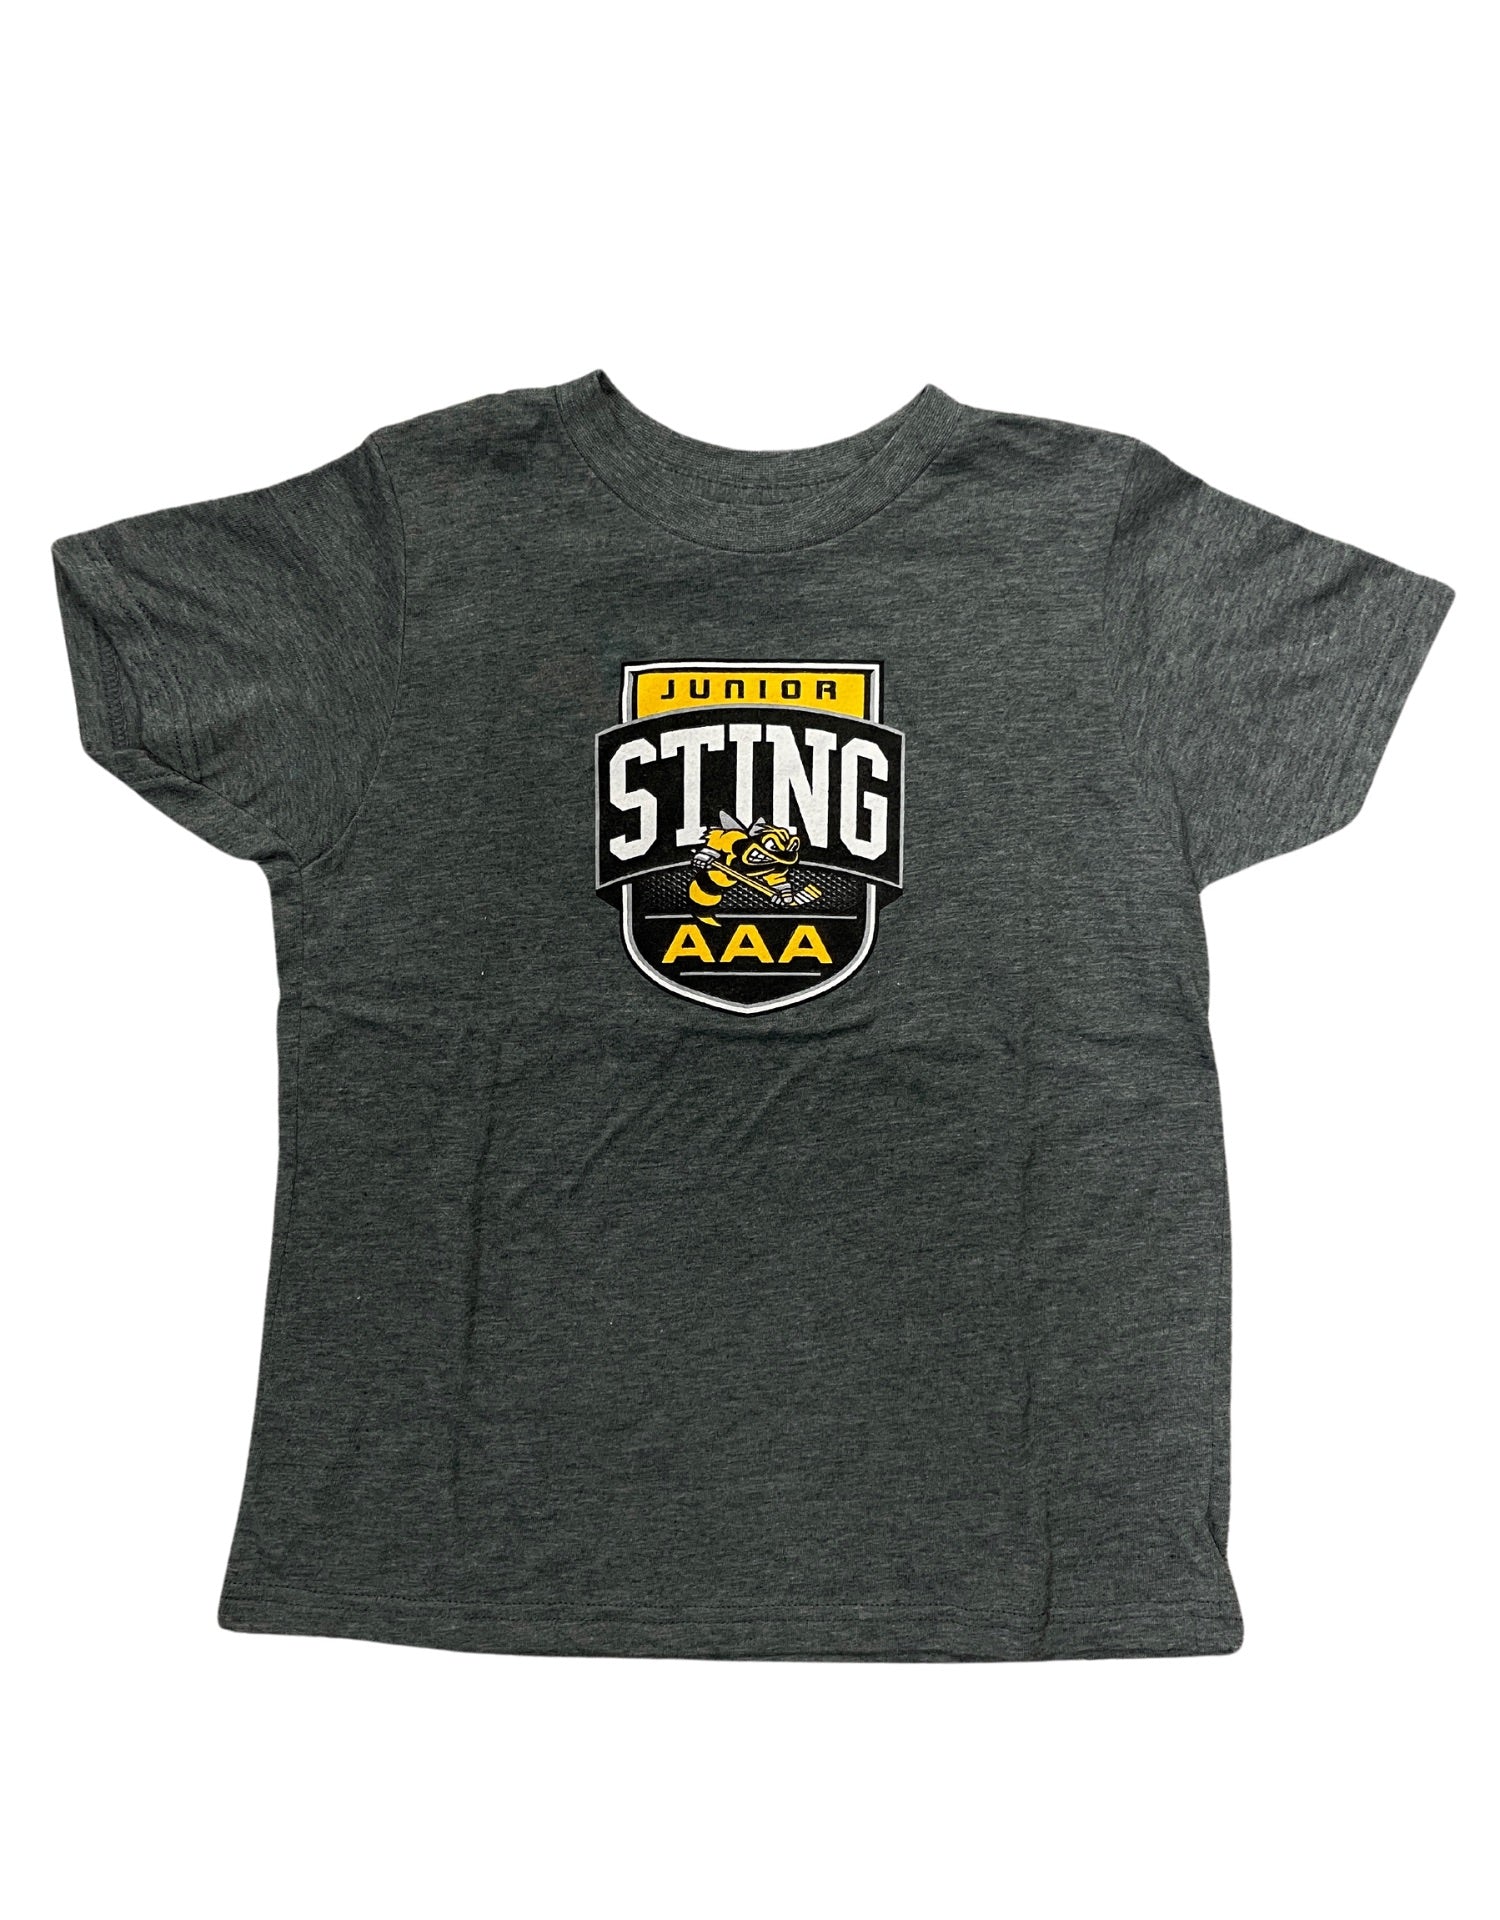 Jr Sting AAA T-Shirt- Youth